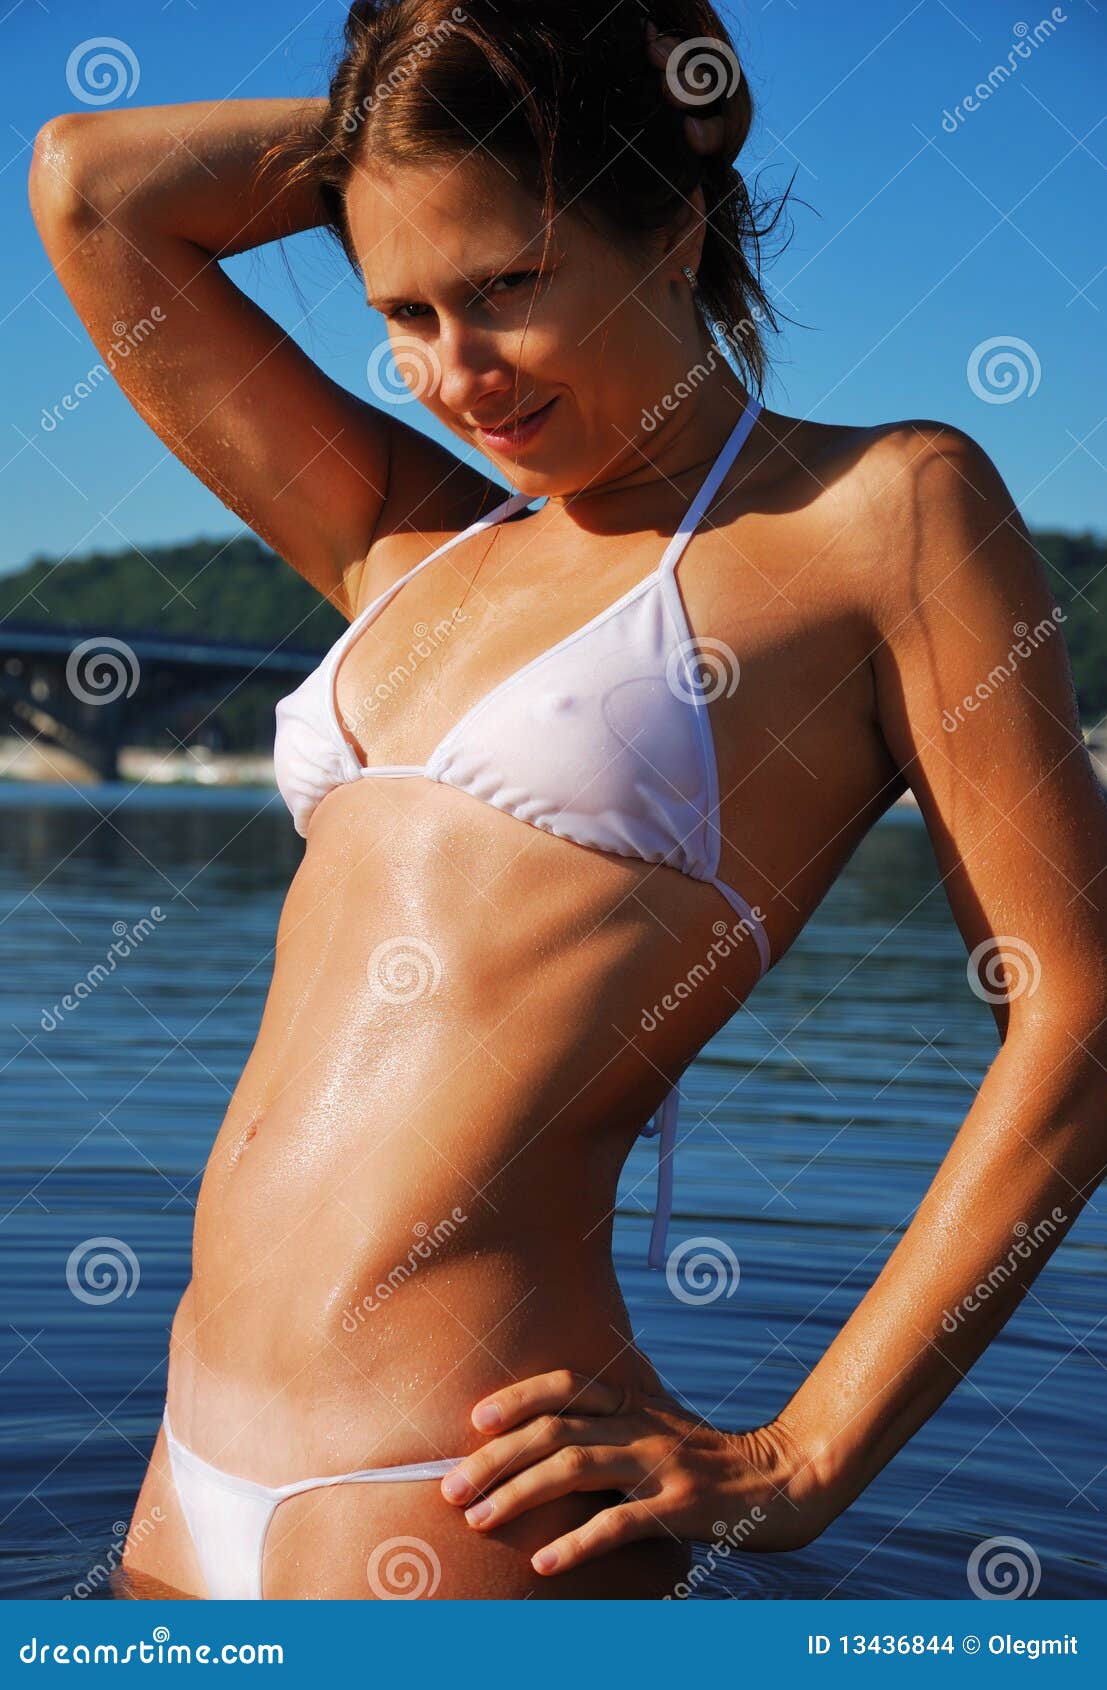 alison navarro recommends transparent when wet bikini pic